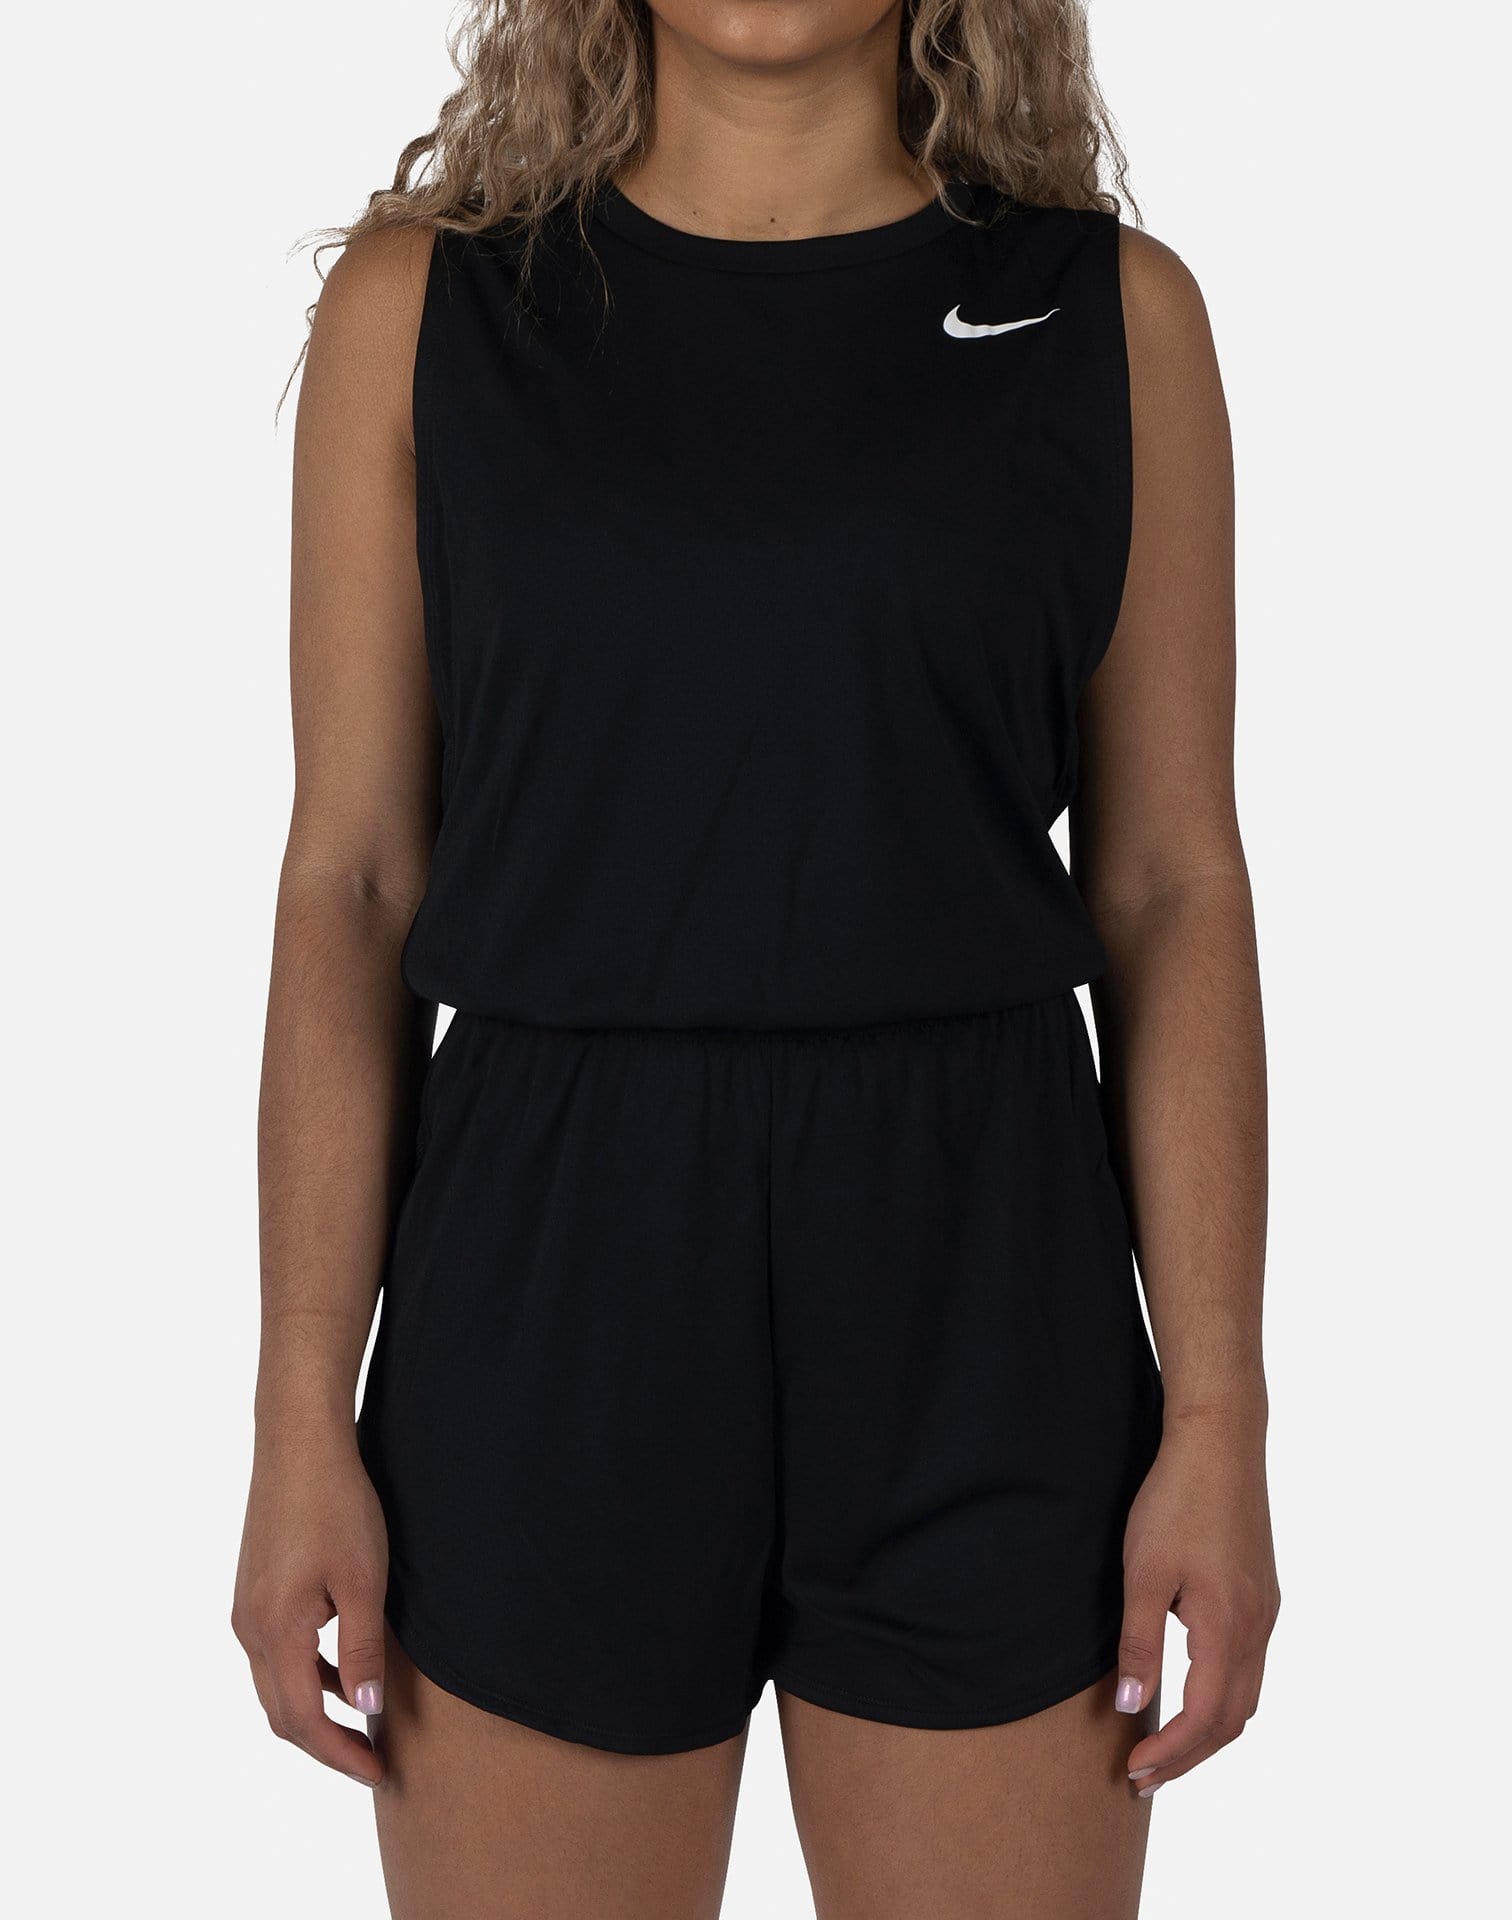 Nike Women's Dri-FIT Running Romper